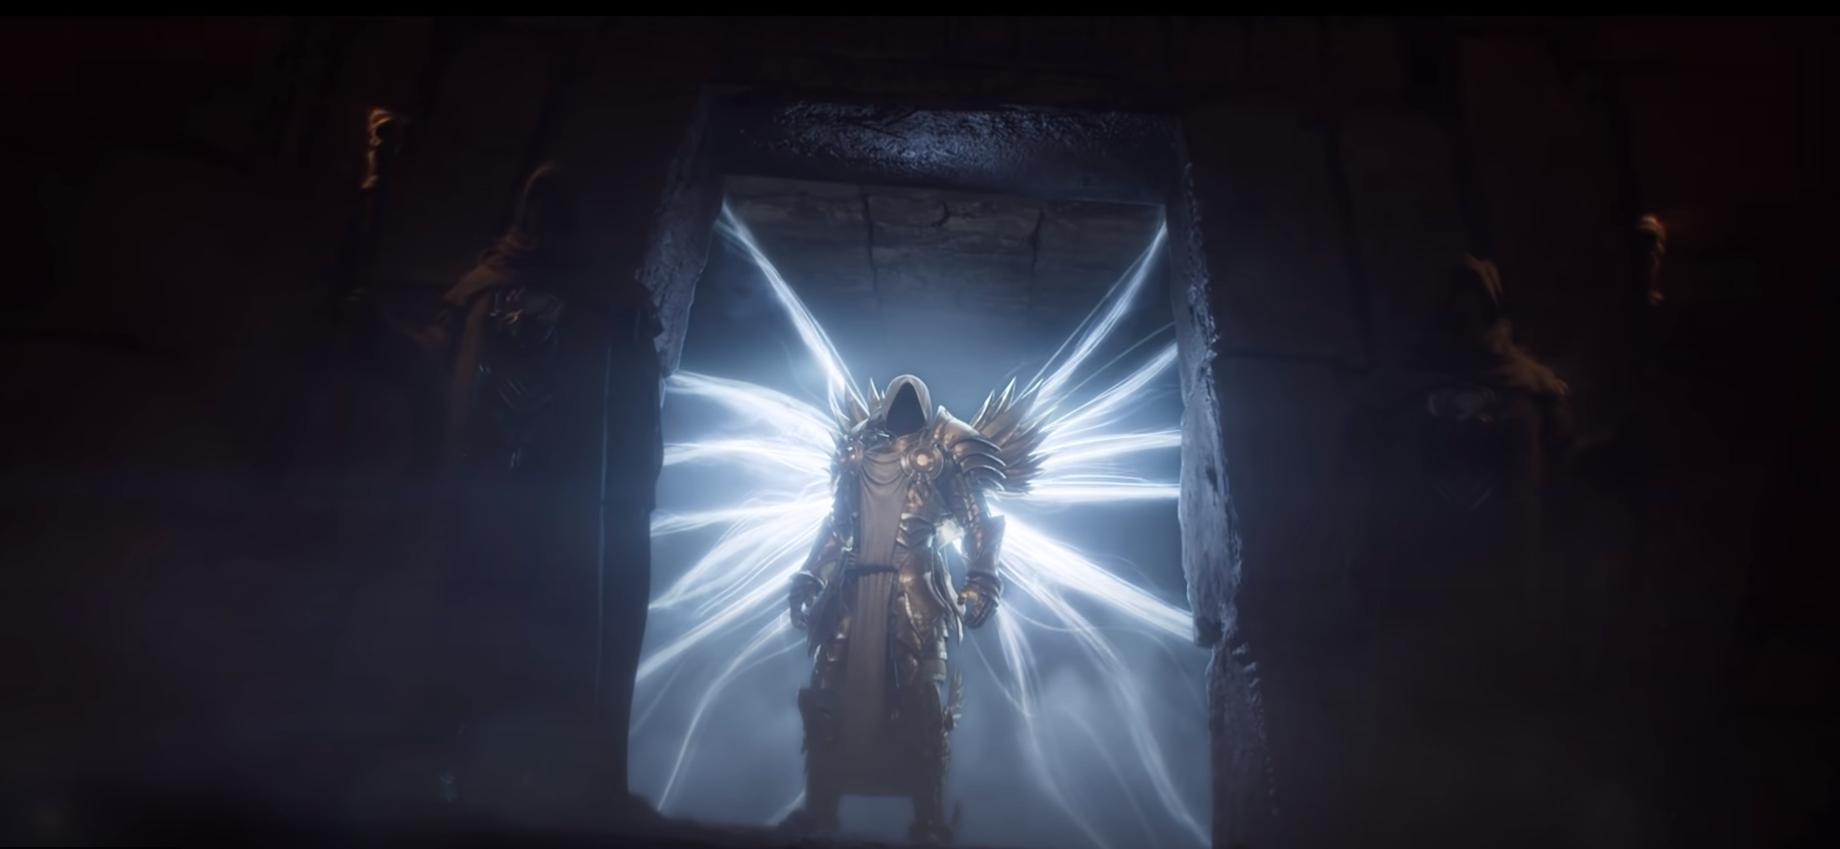 Diablo 2 resurrected - the game will be released on September 23 - trailer 2